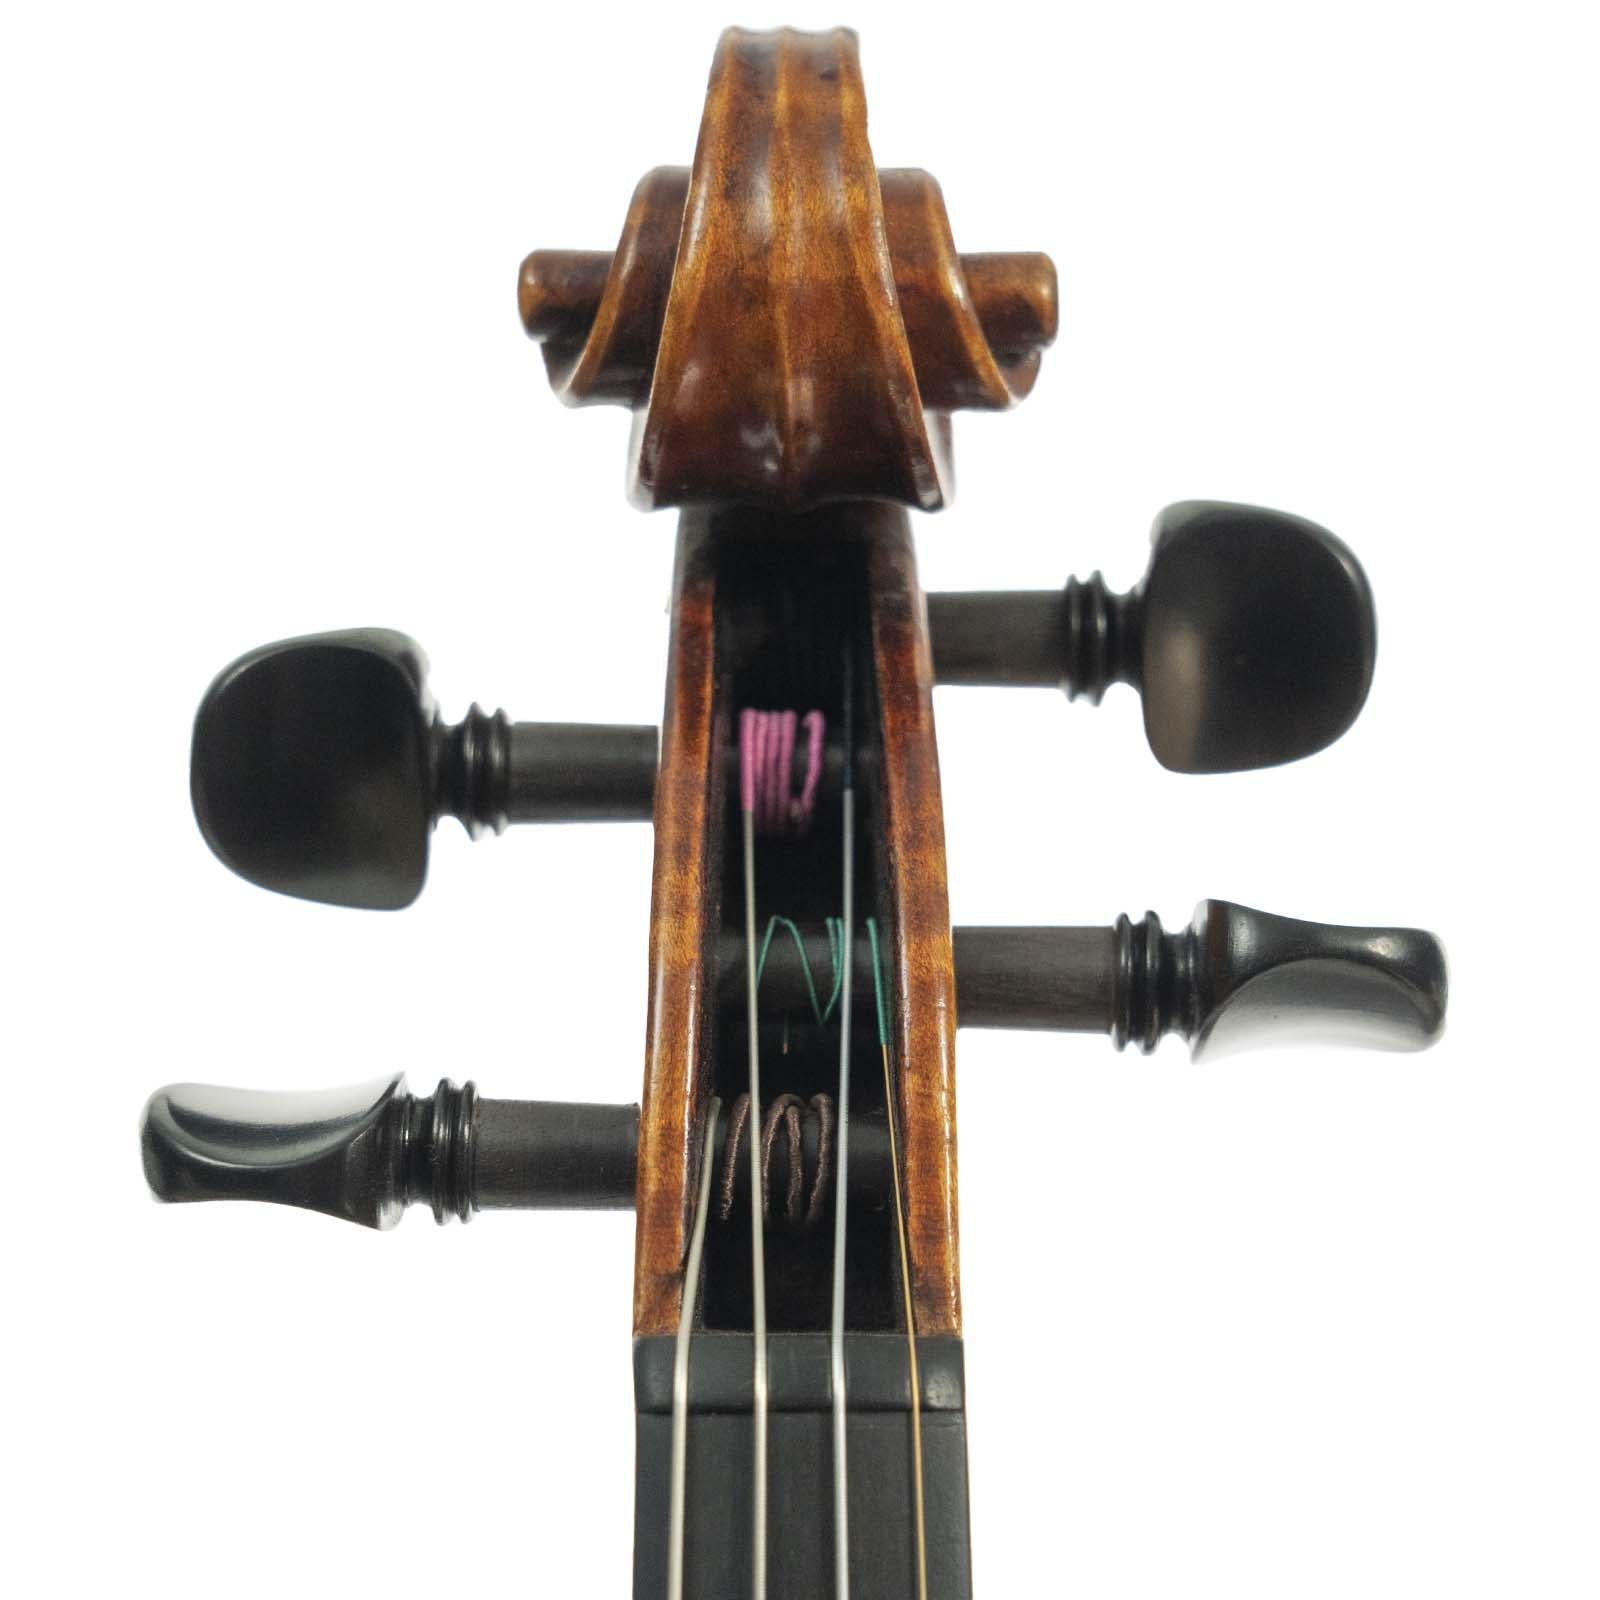 E.H. Roth IVR Violin, Markneukirchen, 1929